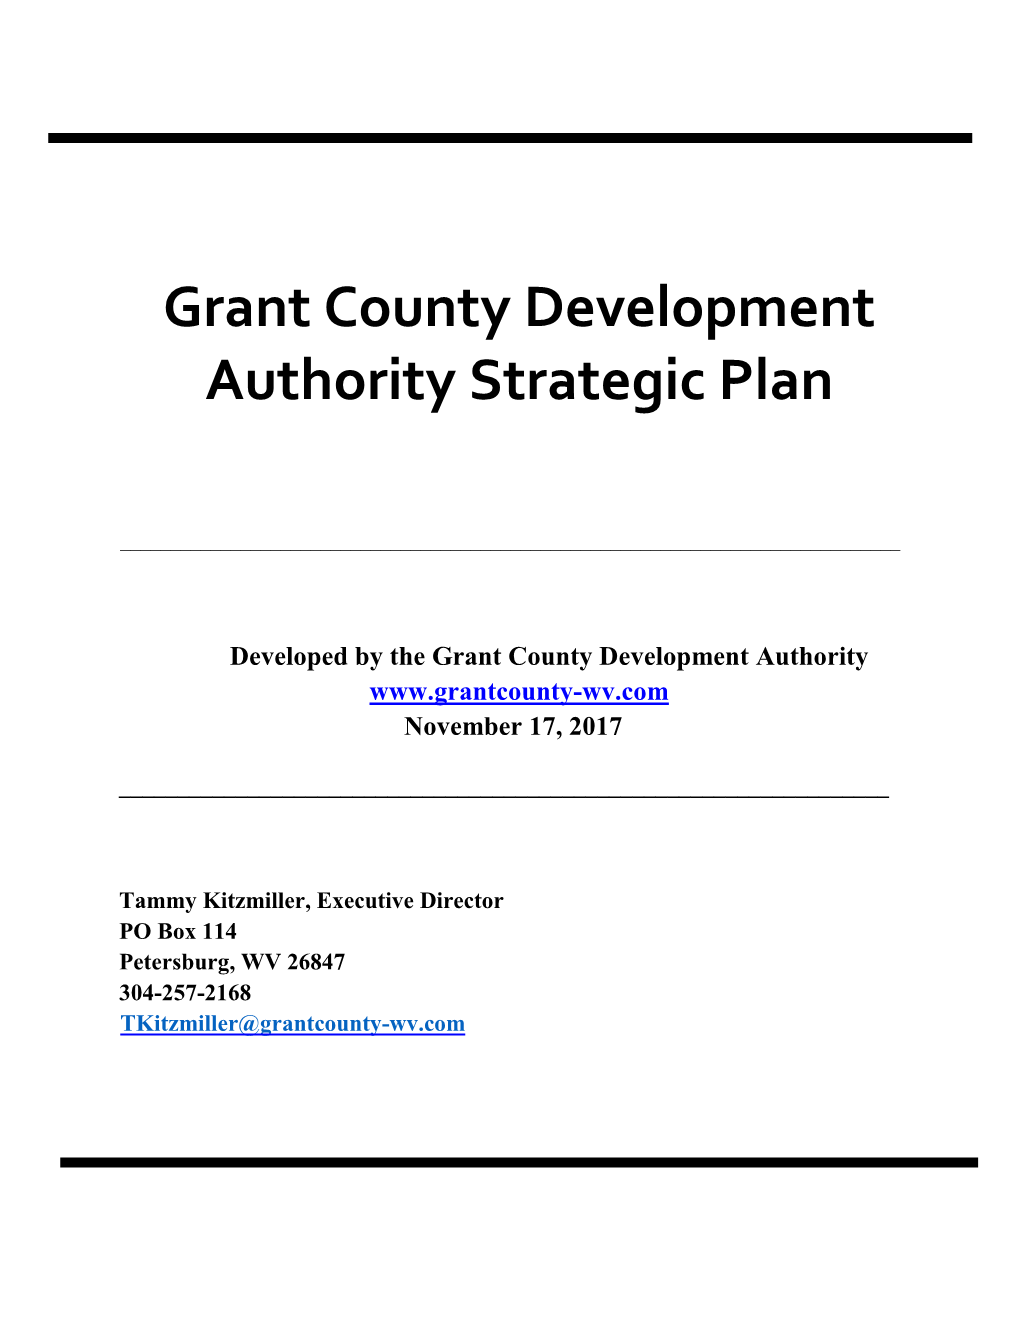 Grant County Development Authority Strategic Plan